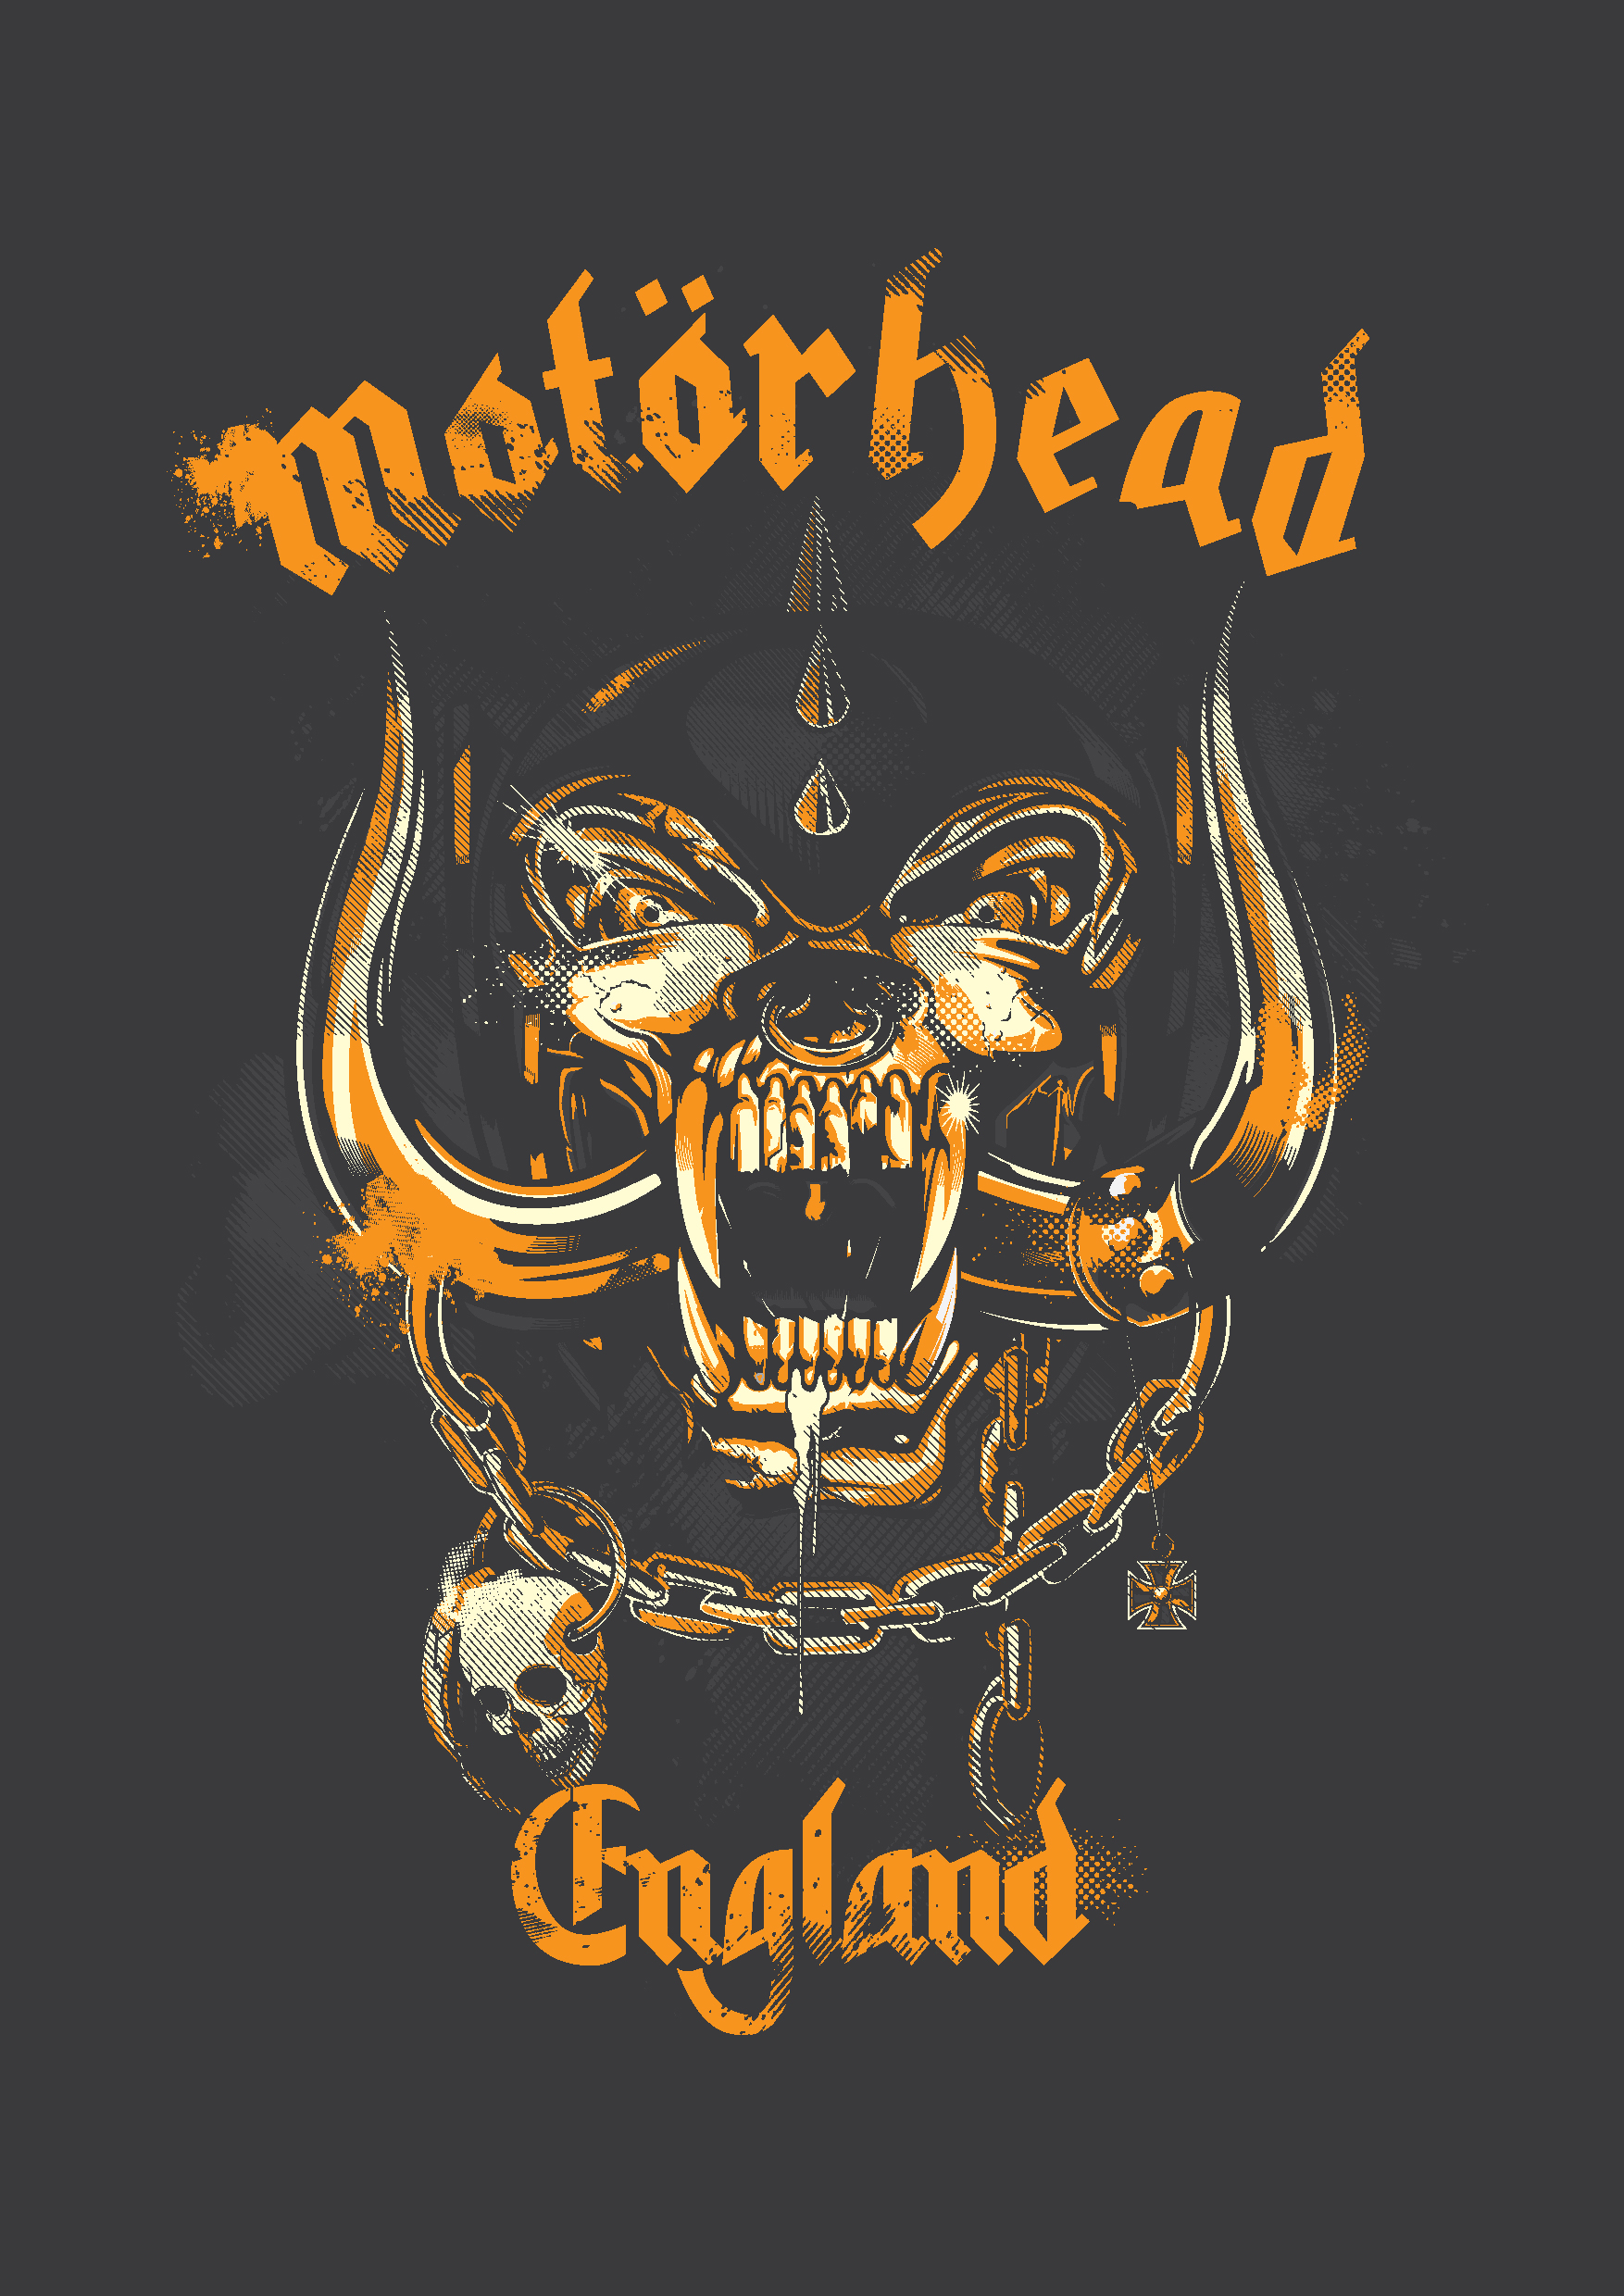 Motorhead Emblem